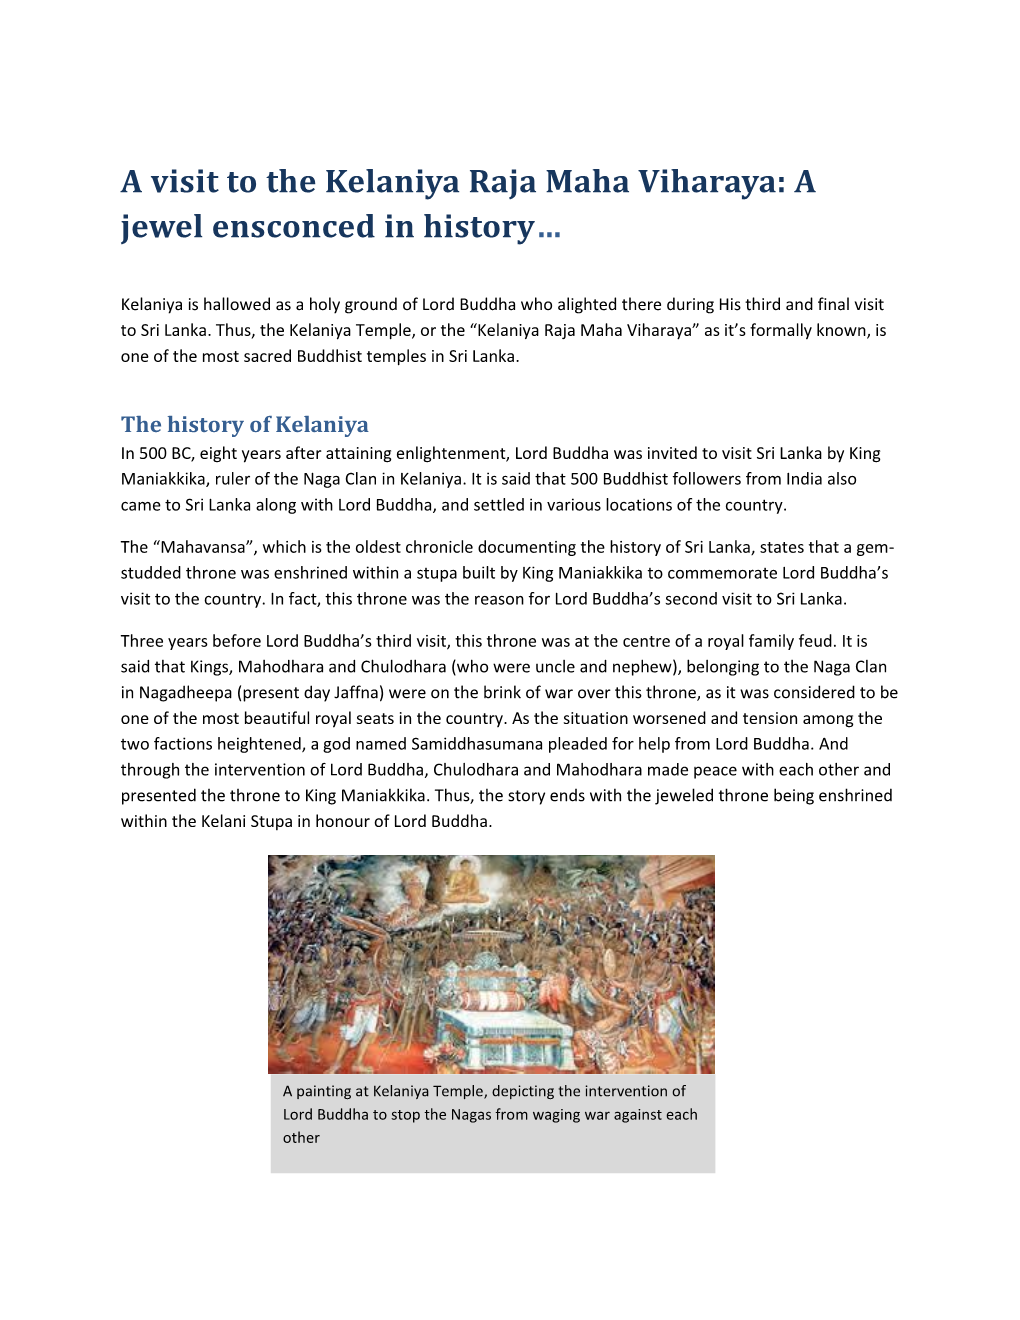 A Visit to the Kelaniya Raja Maha Viharaya: a Jewel Ensconced in History…